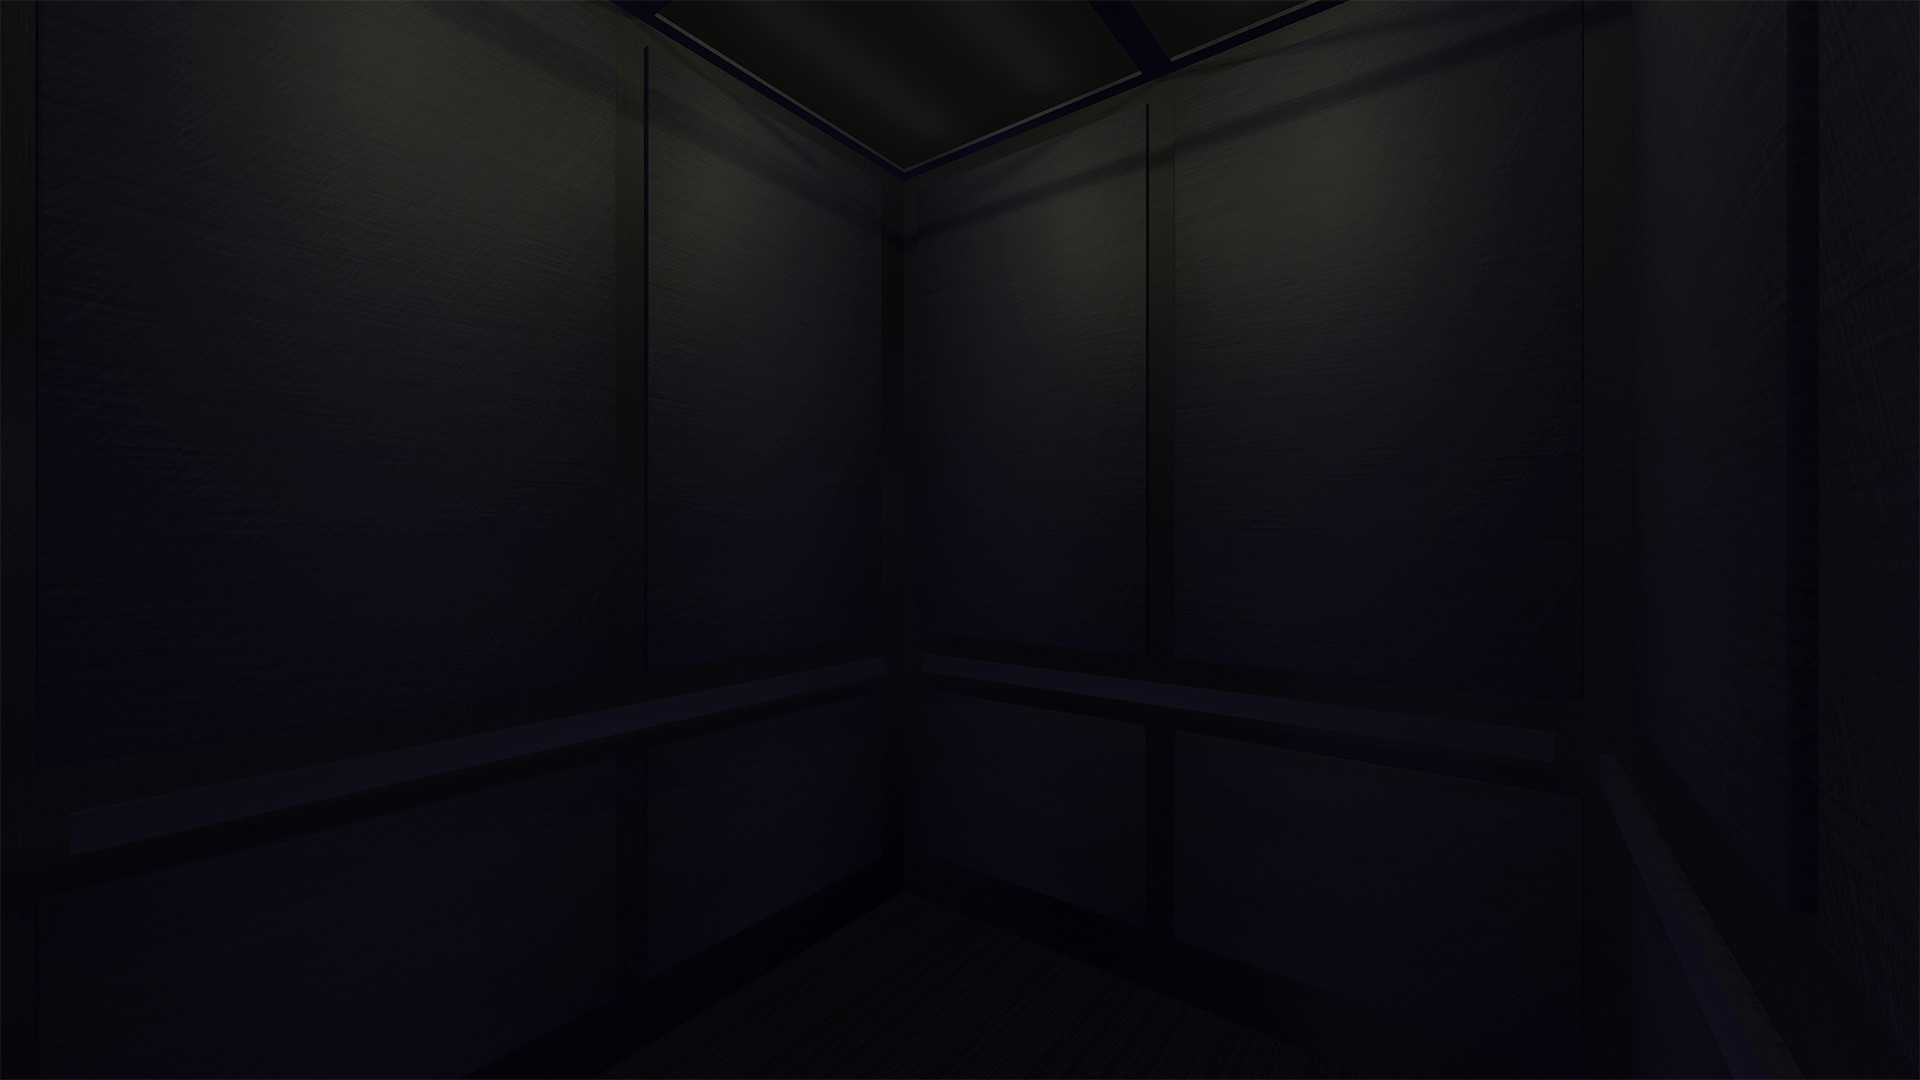 Elevator VR